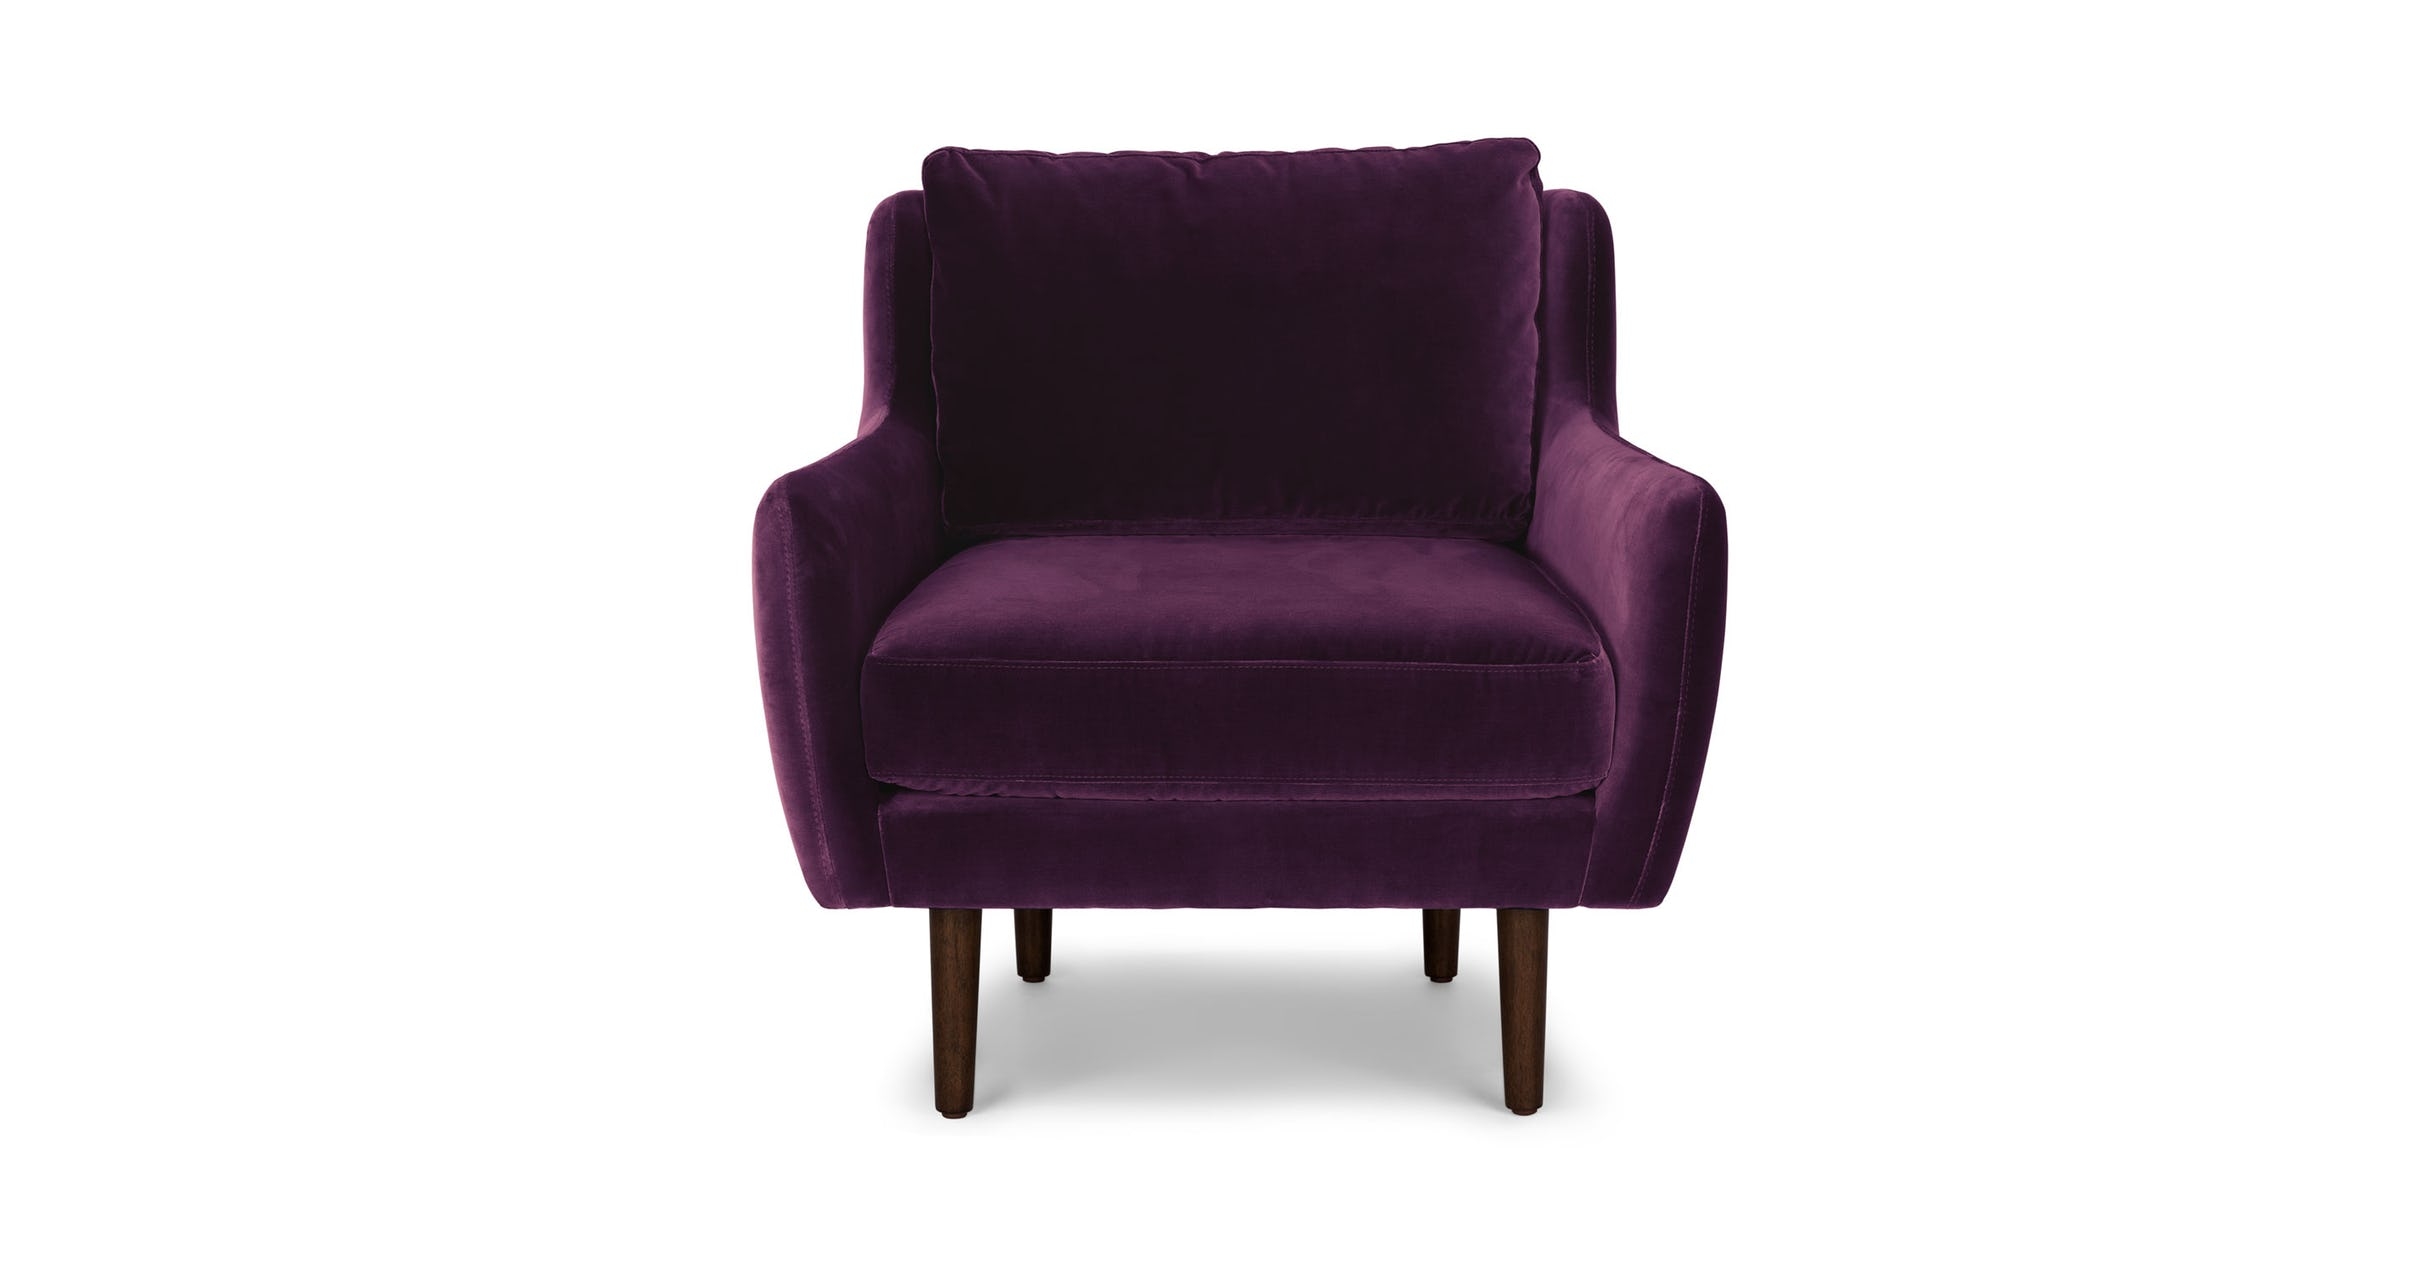 Matrix Lounge Chair - Italian Plum AND WALNUT - Image 0